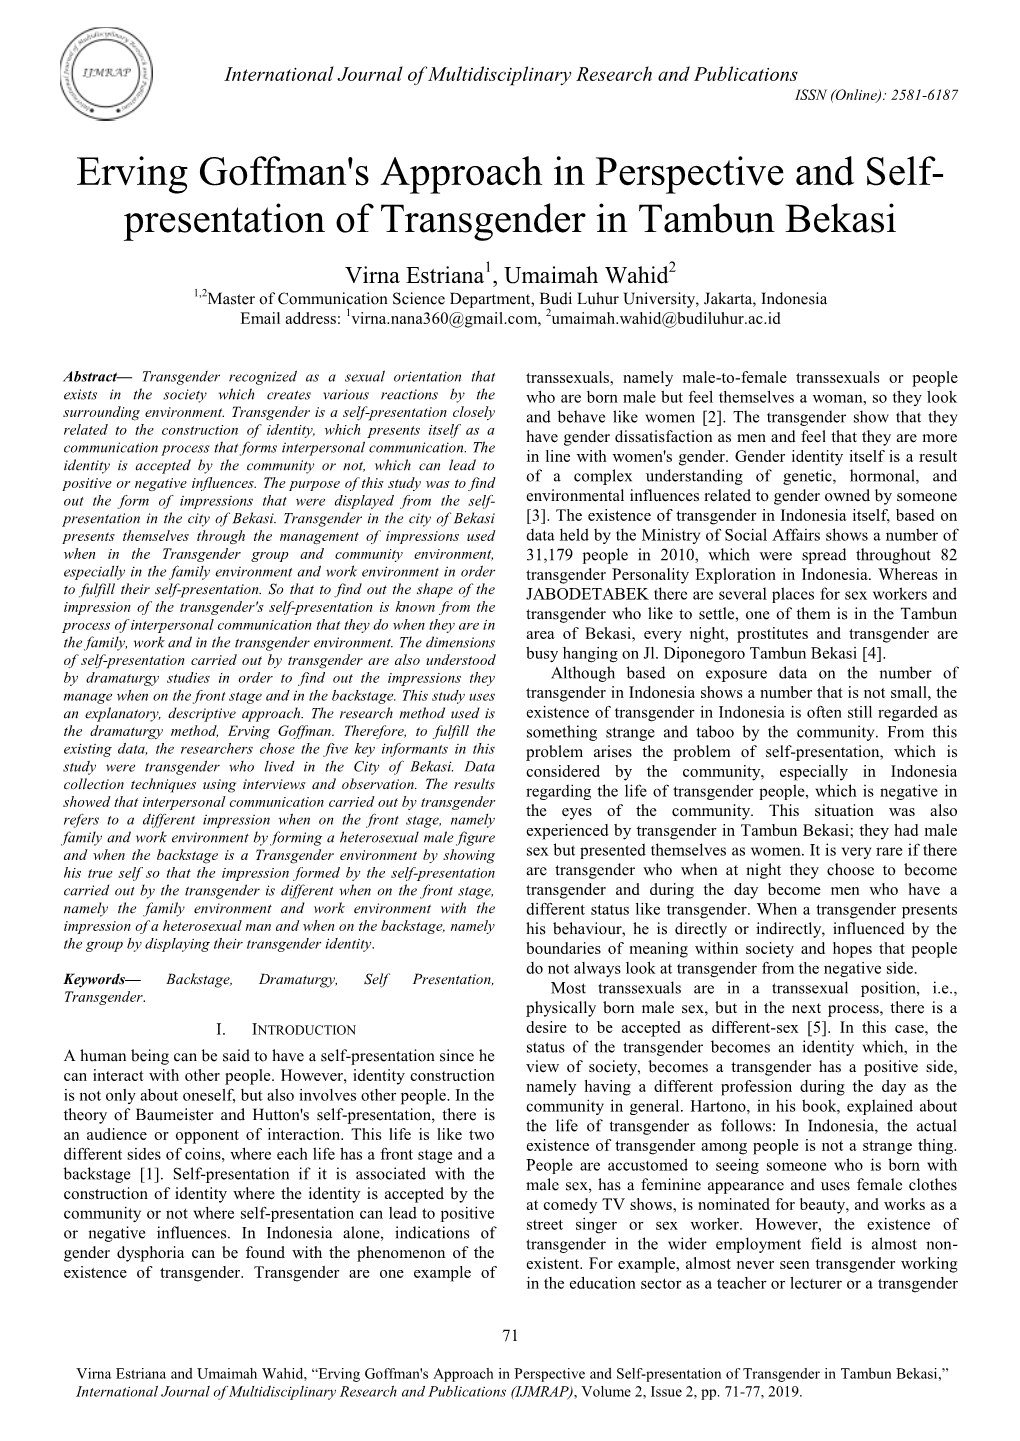 Erving Goffman's Approach in Perspective and Self- Presentation of Transgender in Tambun Bekasi